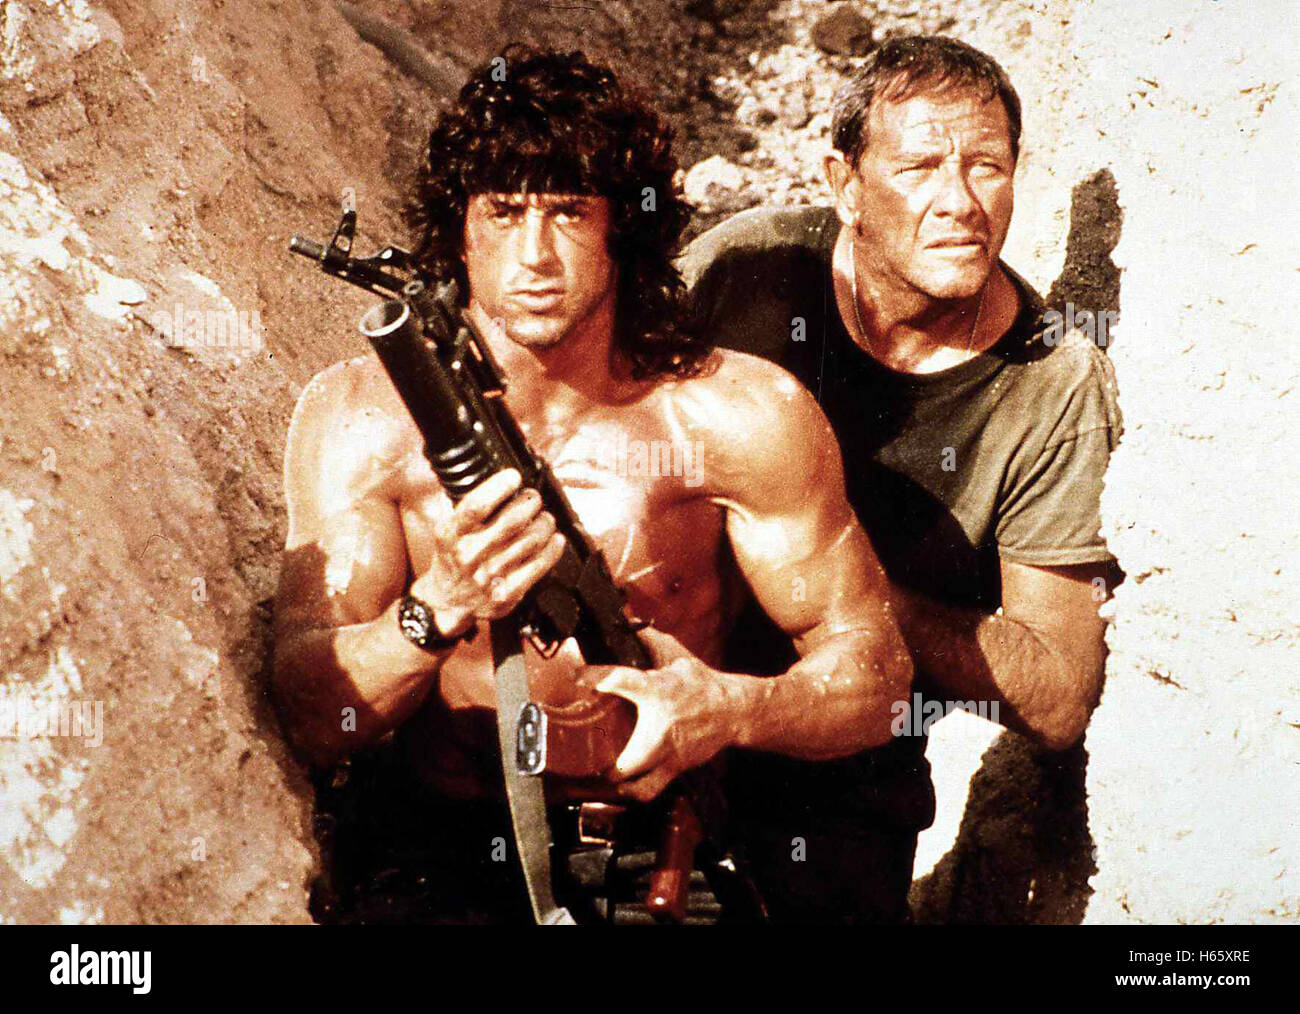 Rambo III (1988), Rambo 3, Director: Peter MacDonald, Actors/Stars: Sylvester Stallone, Richard Crenna, Marc de Jonge Stock Photo